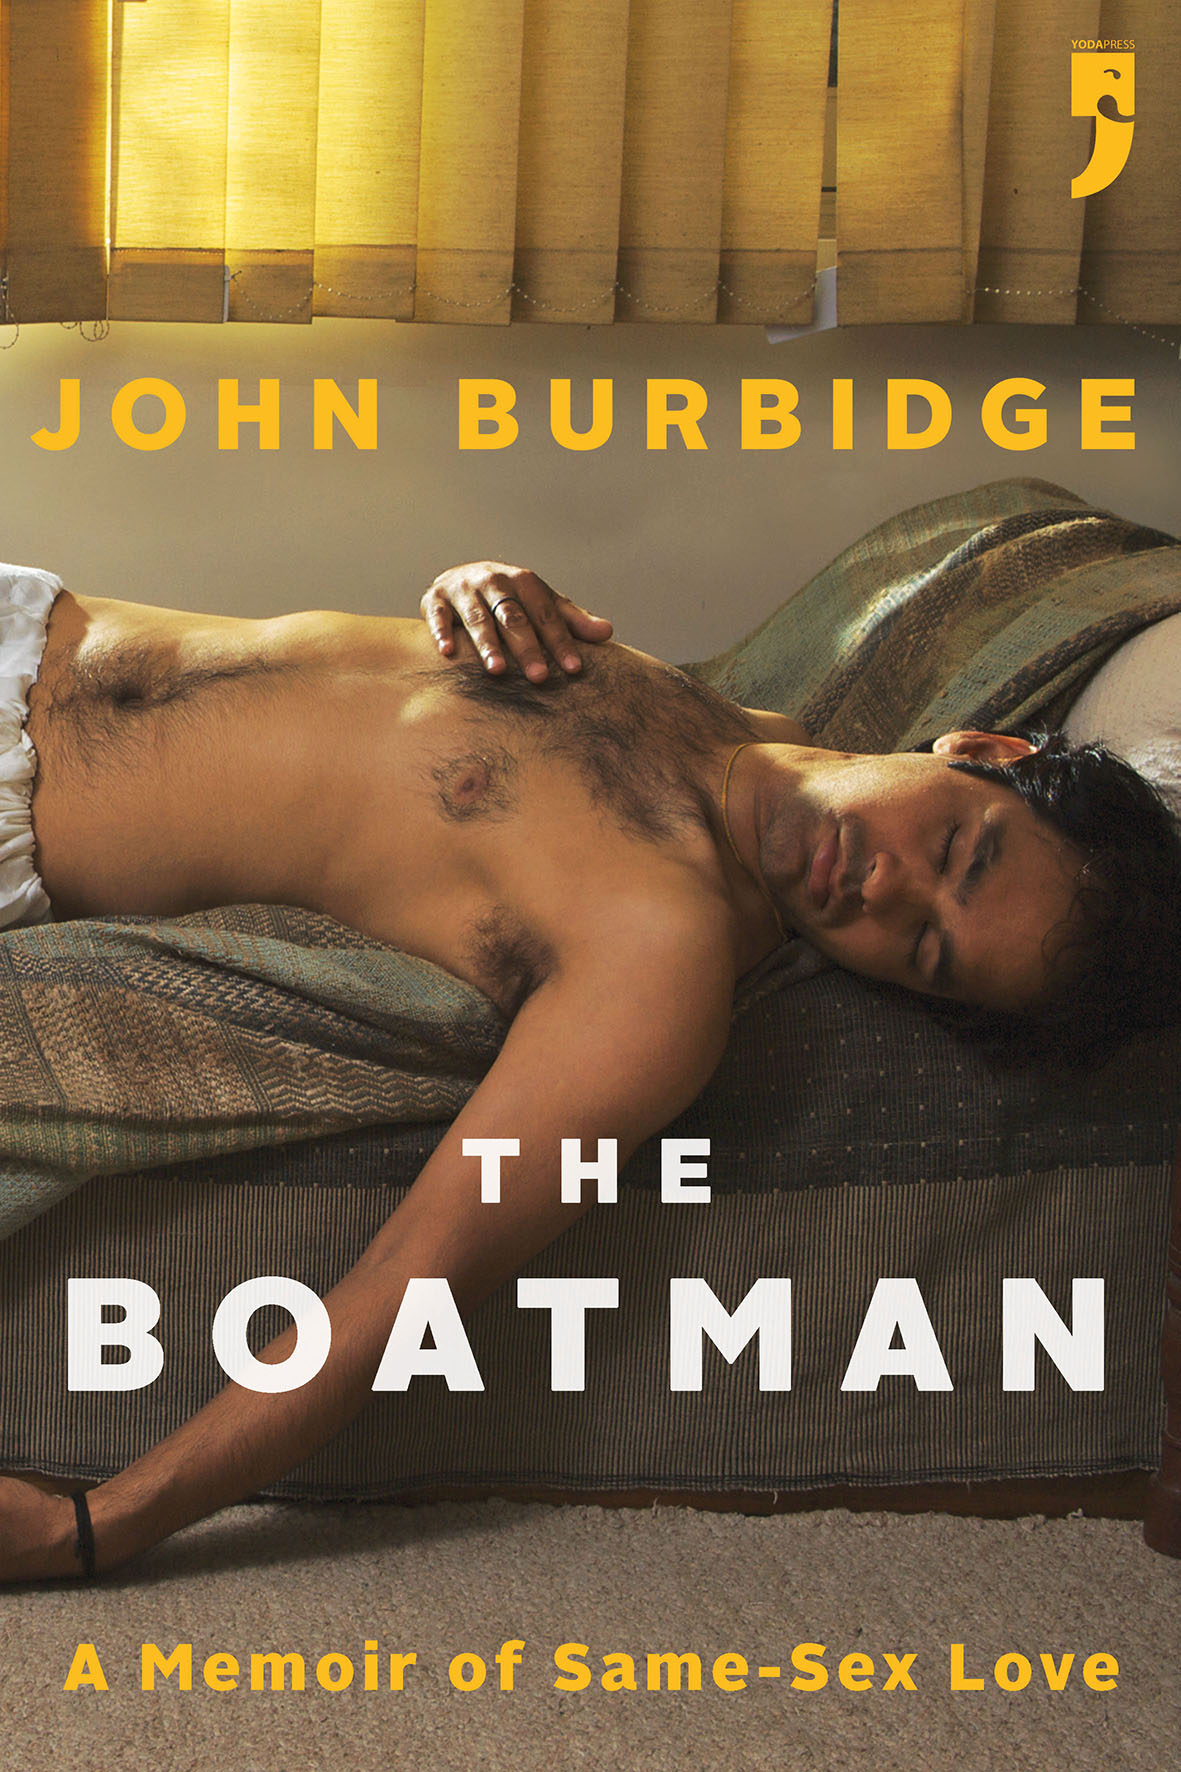 Adventures Of Burbidge, The Boatman, in India